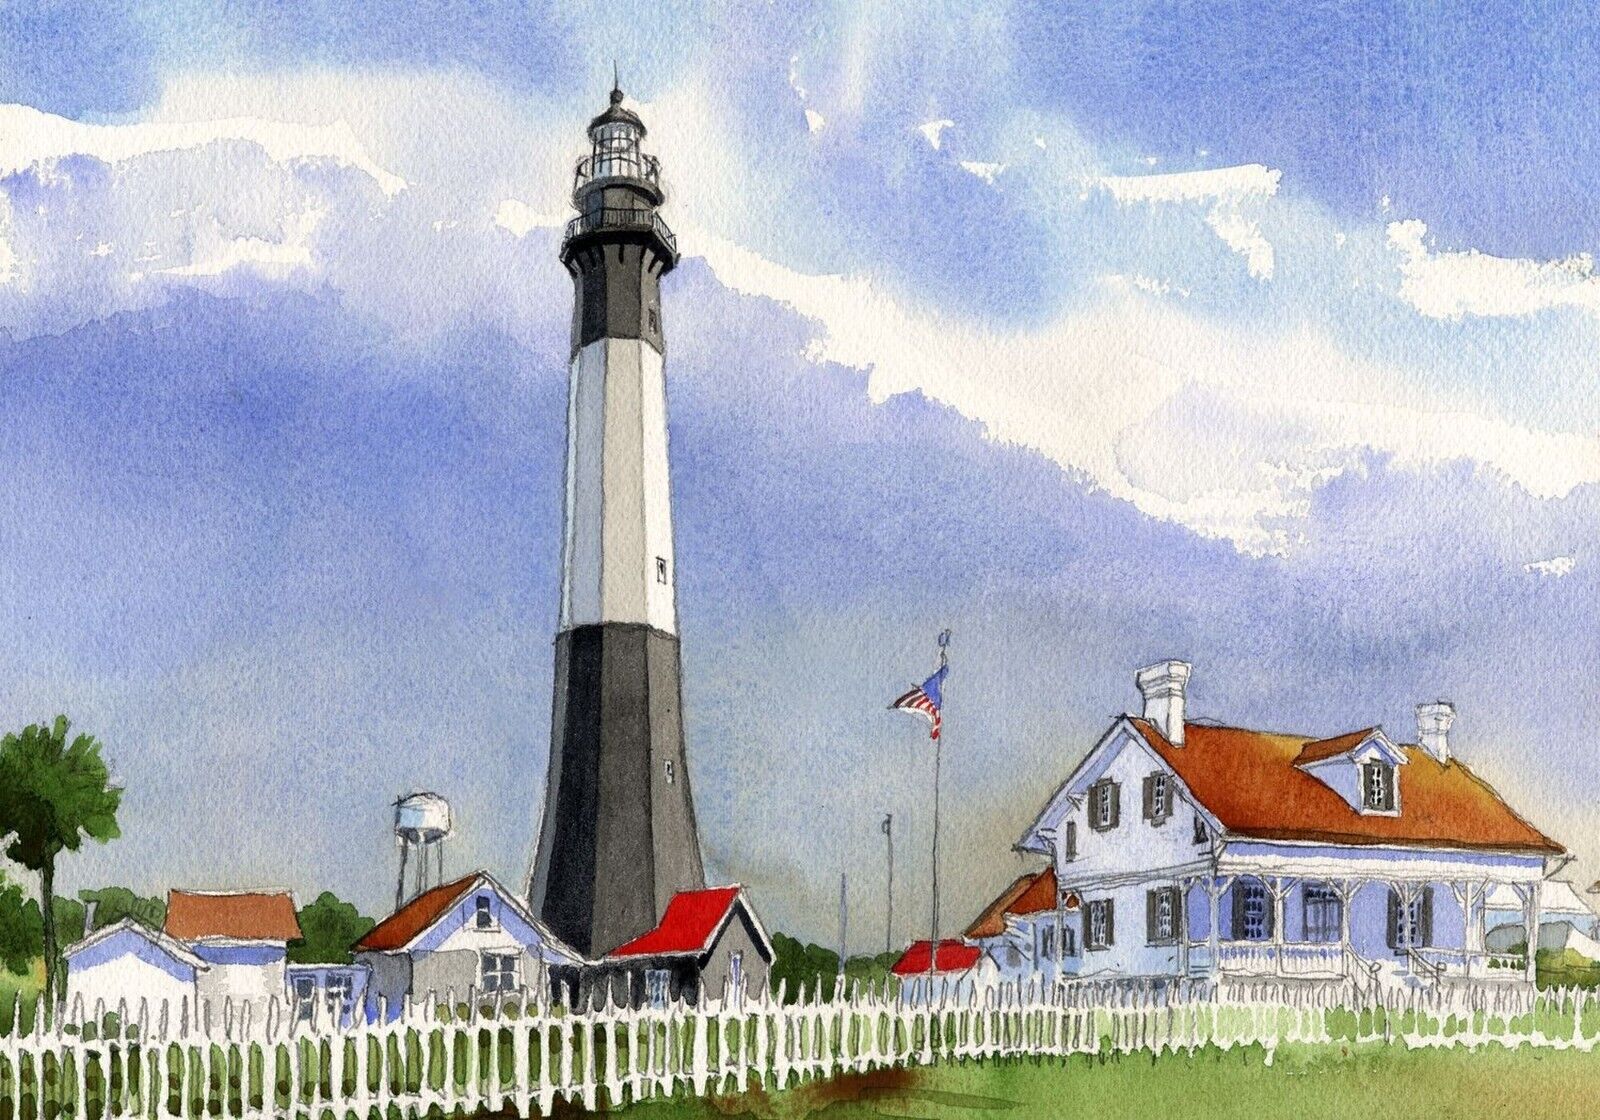 Tybee Island Lighthouse Georgia Fridge Magnet. James Mann watercolor landscape